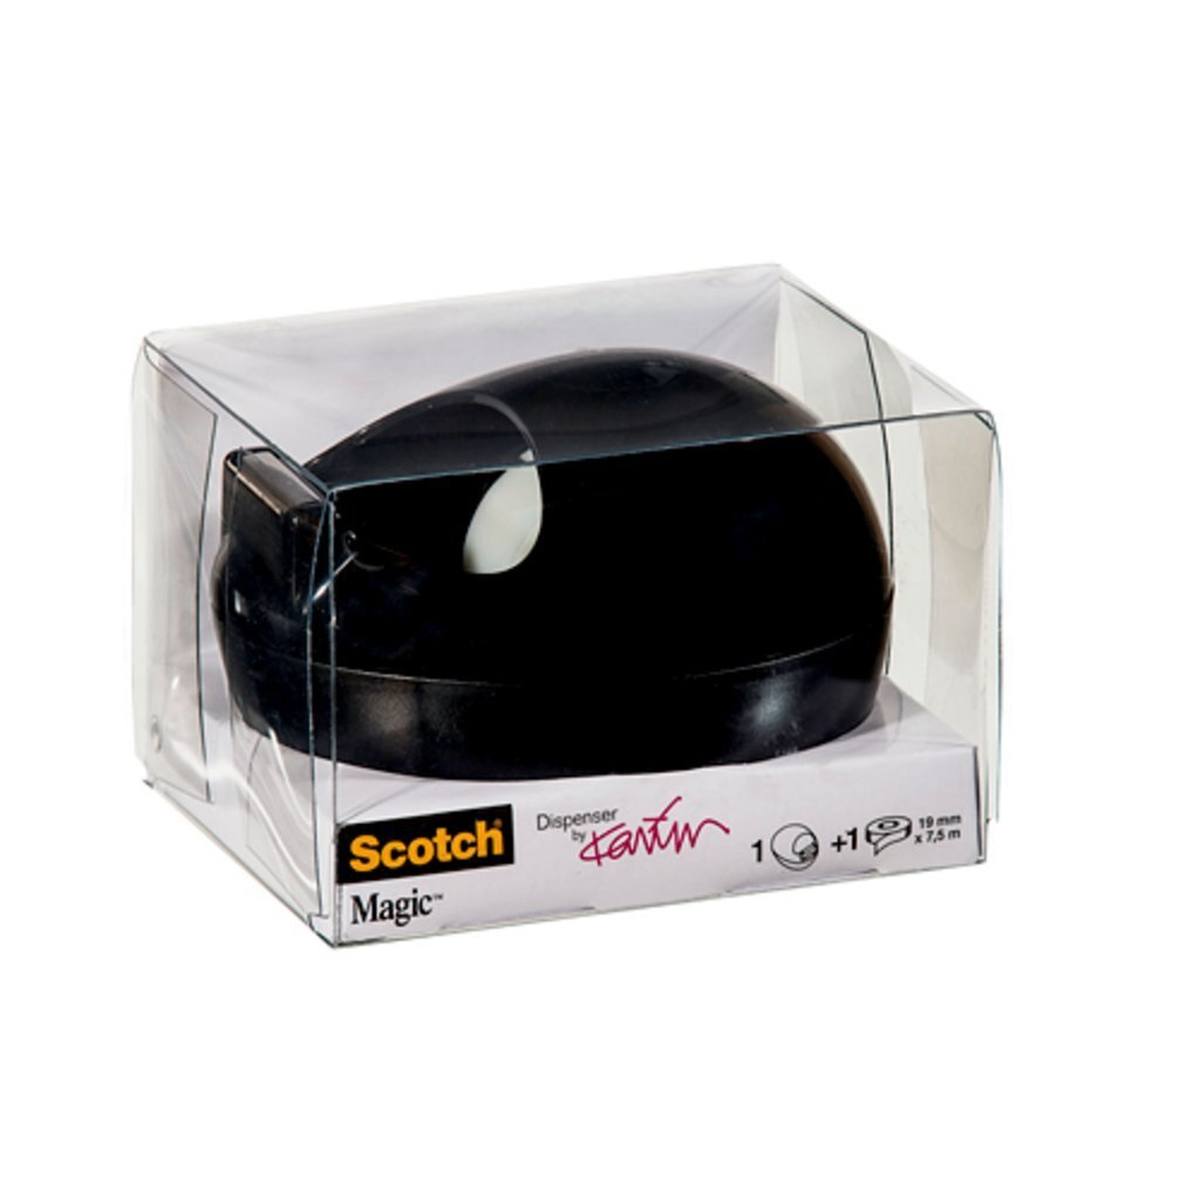 3M Scotch dispenser by Karim Rashid black + 1 roll Scotch Magic adhesive tape 19 mm x 7.5 m